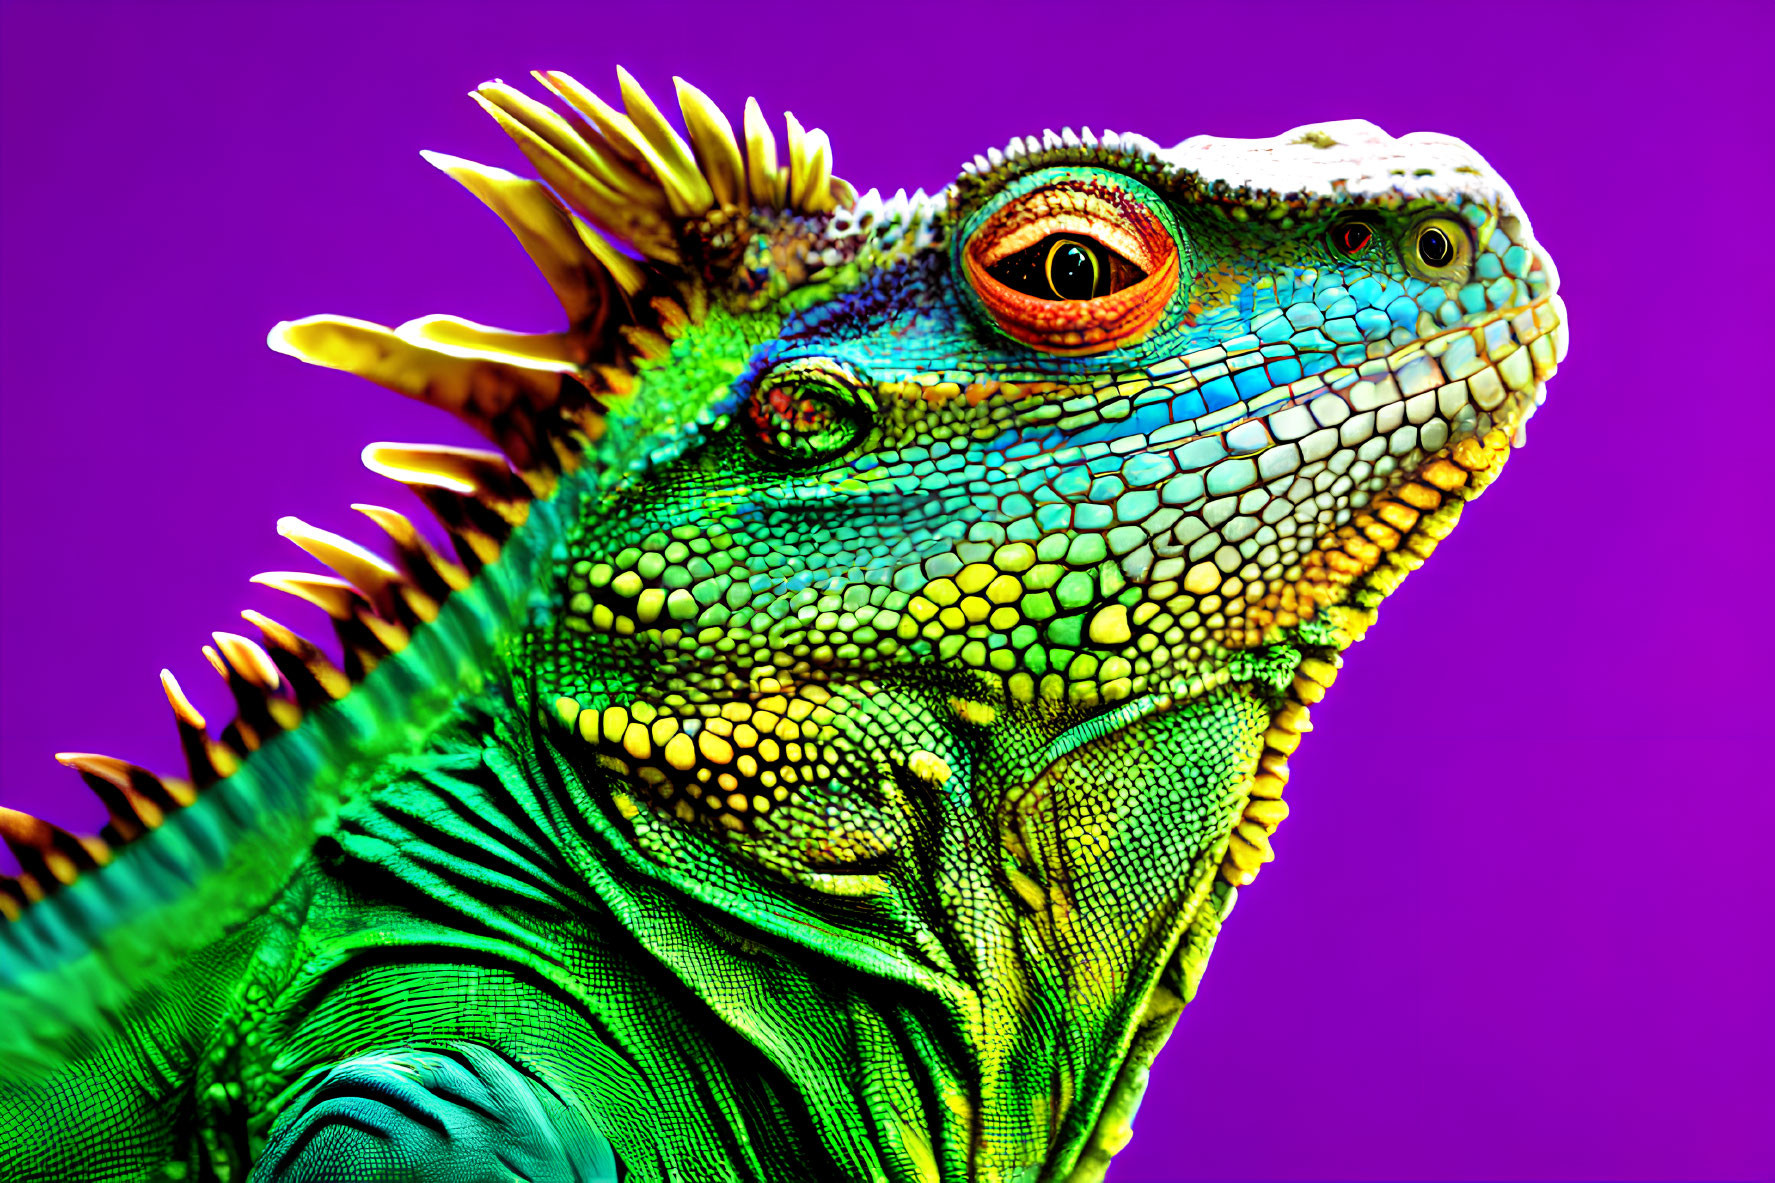 Detailed Close-Up of Green Iguana on Purple Background